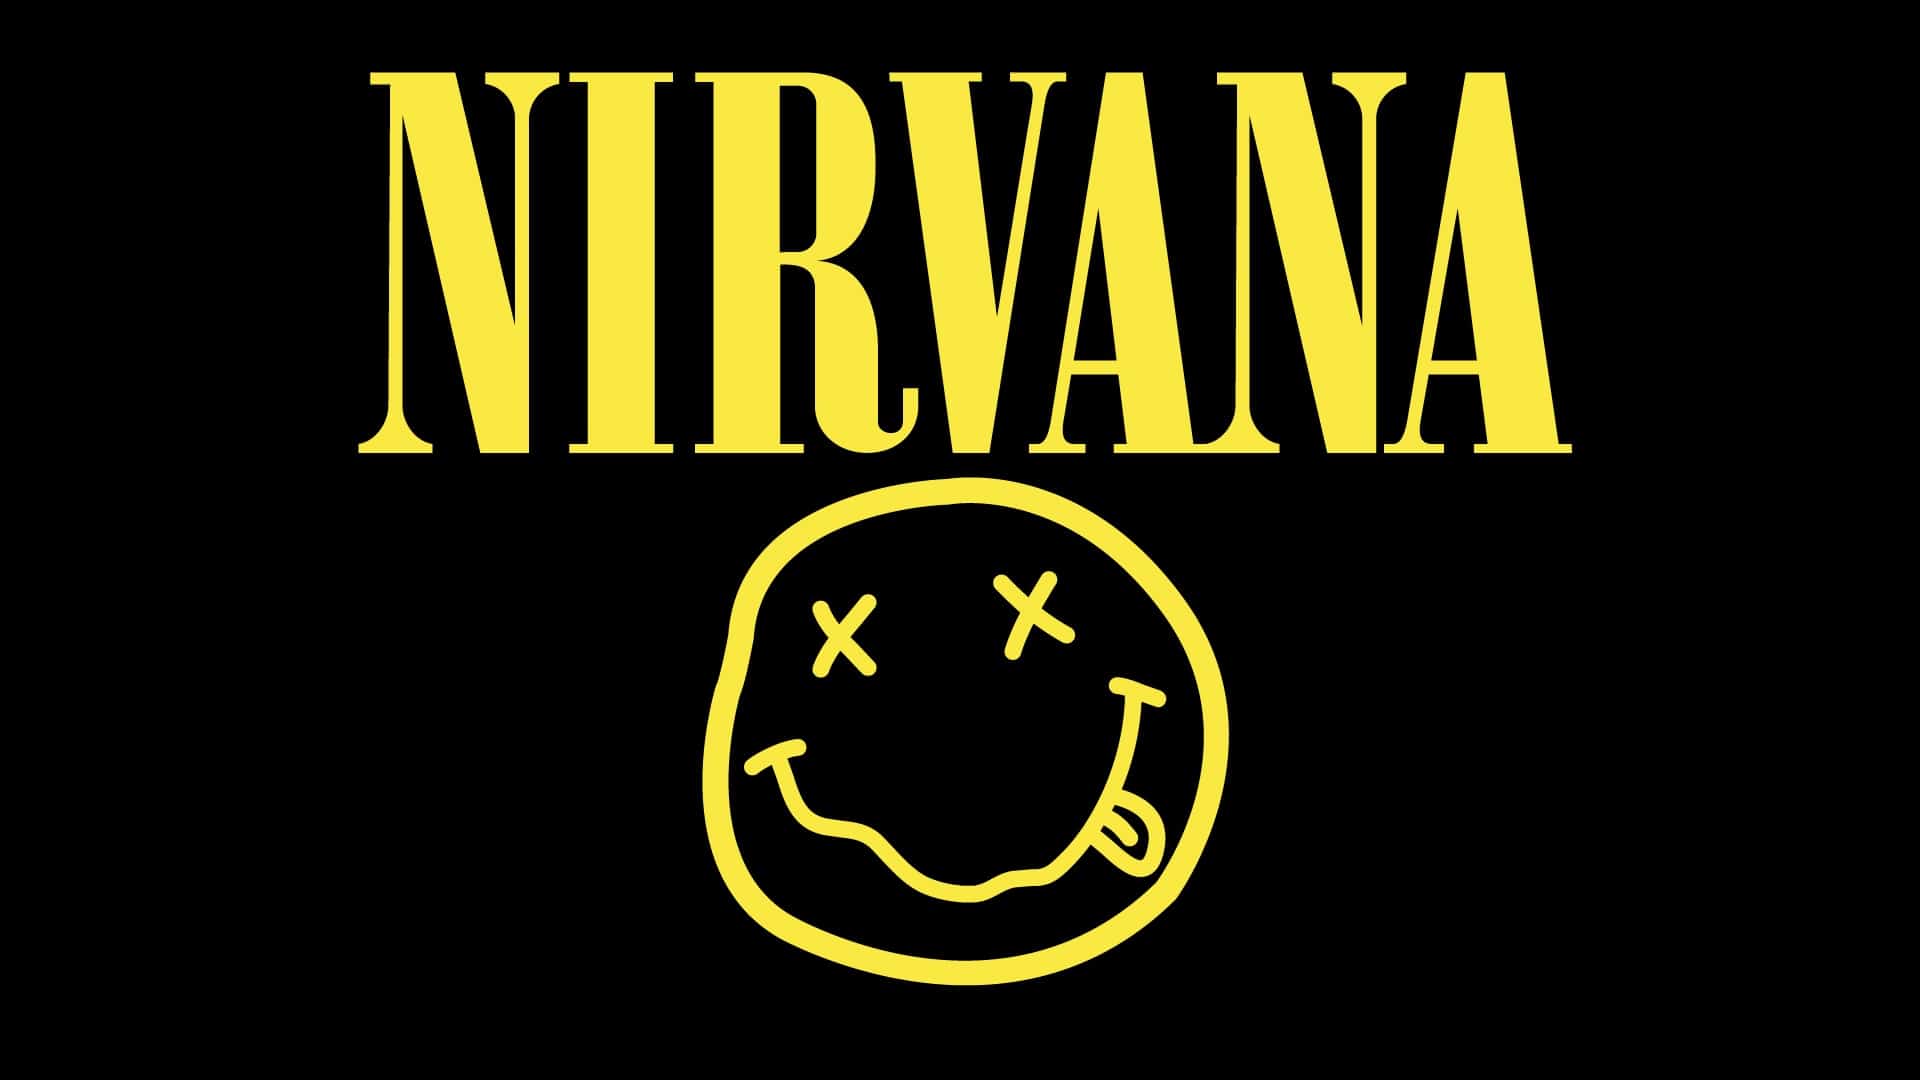 Nirvana logo histoire et signification, evolution, symbole Nirvana